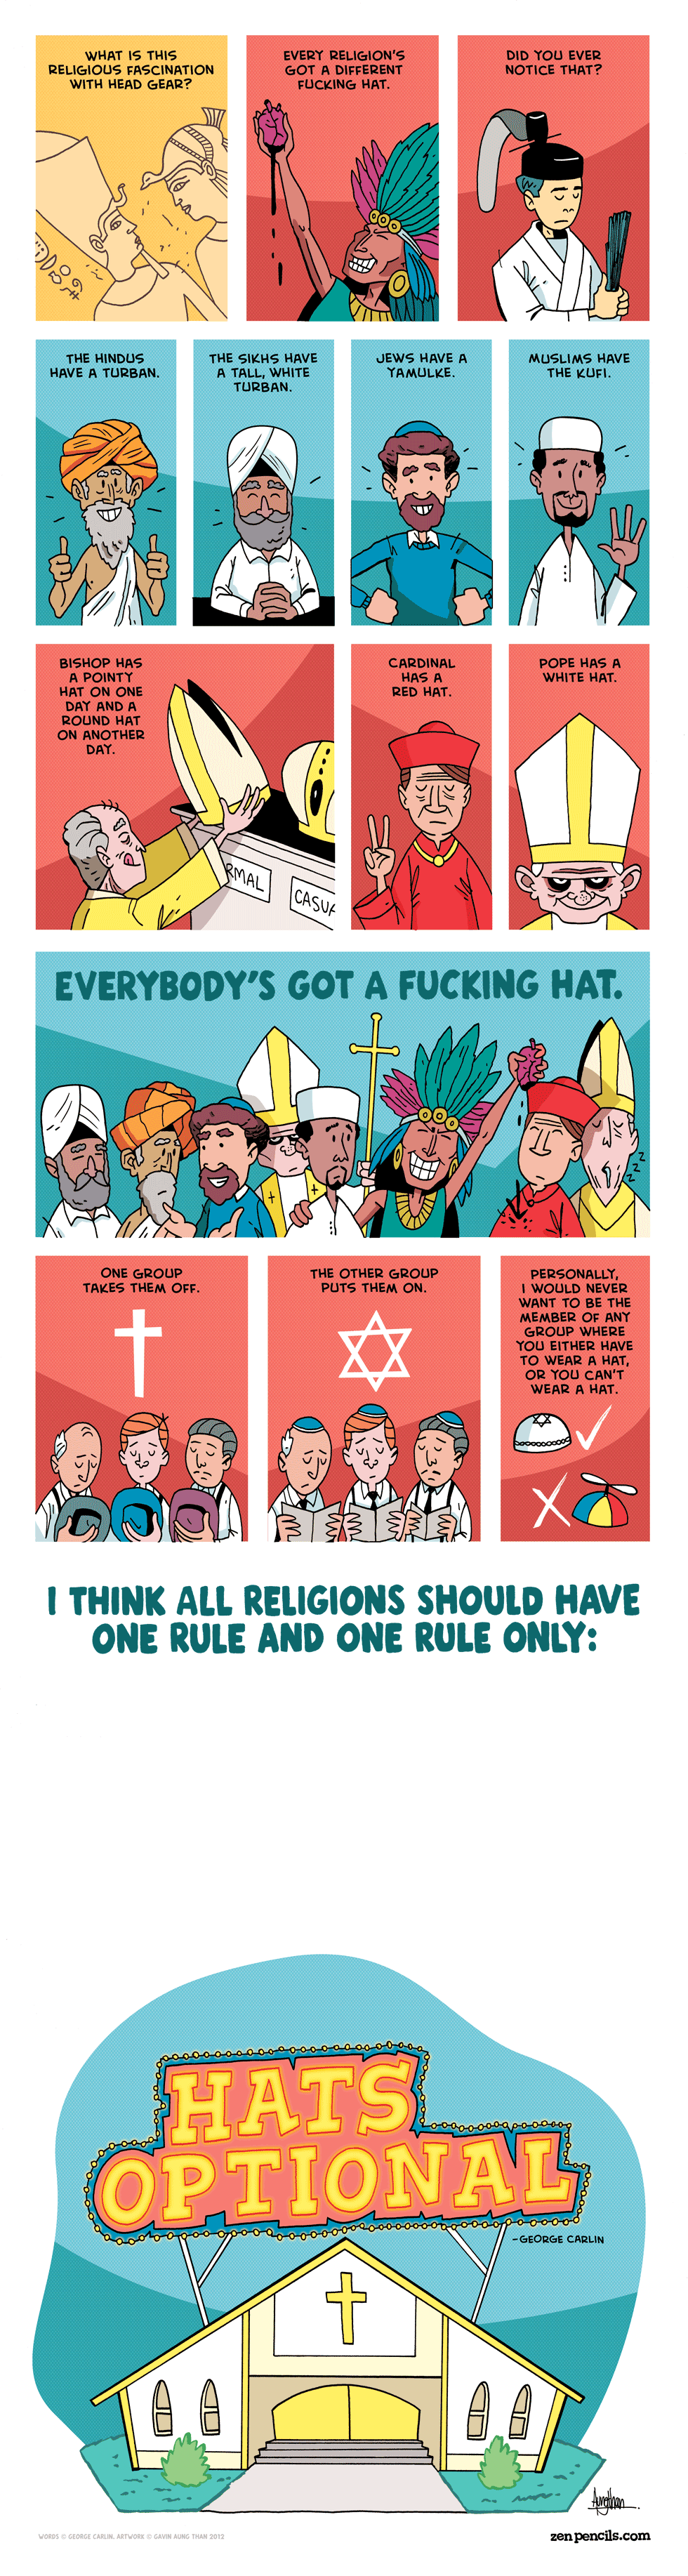 On religious hats